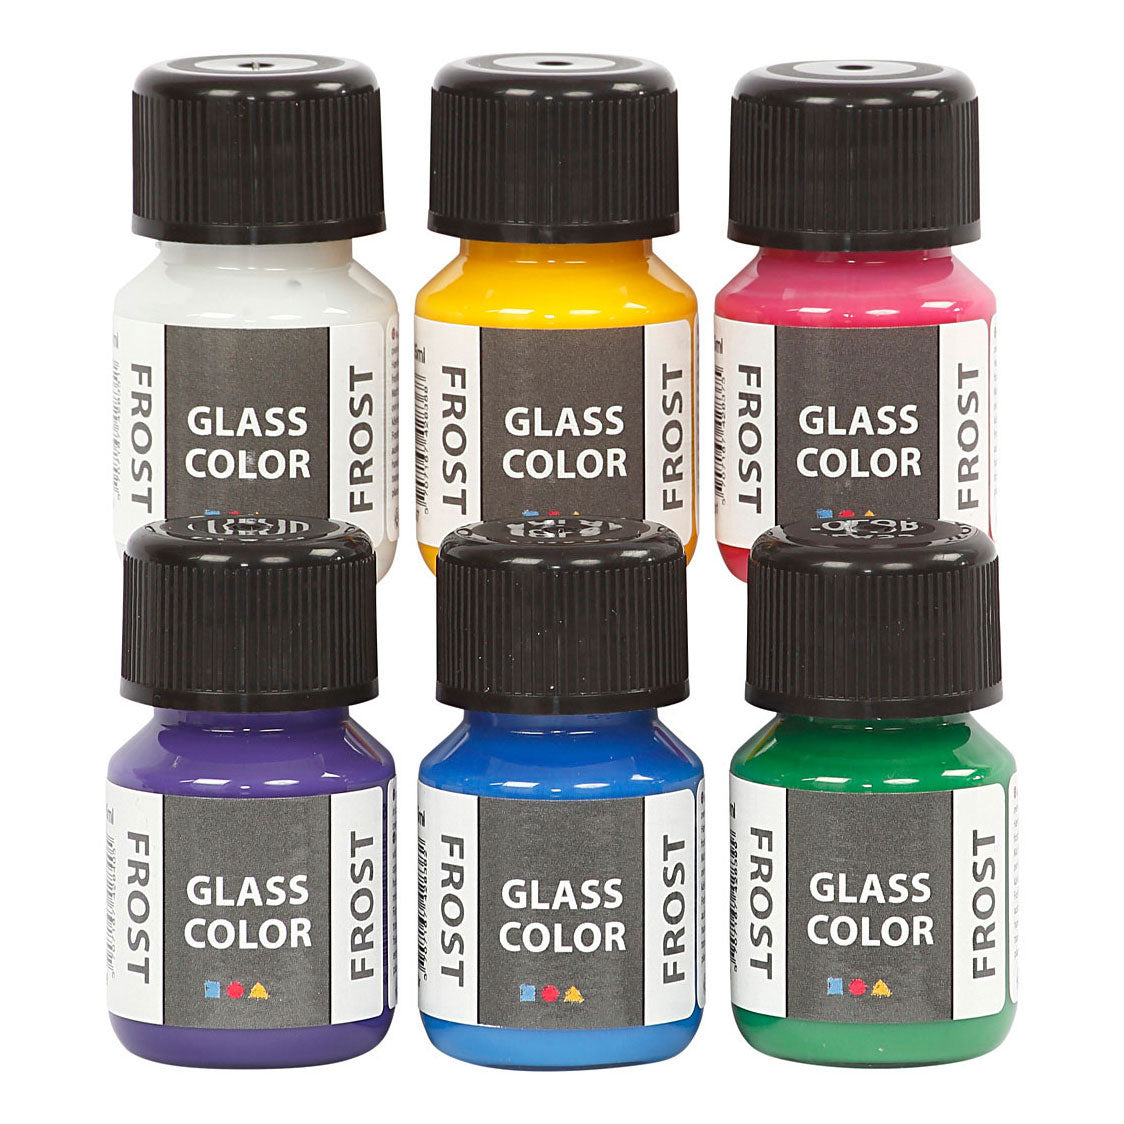 Creativ Company Glass Color Escarcha Pintura para Vidrio, 6x30ml